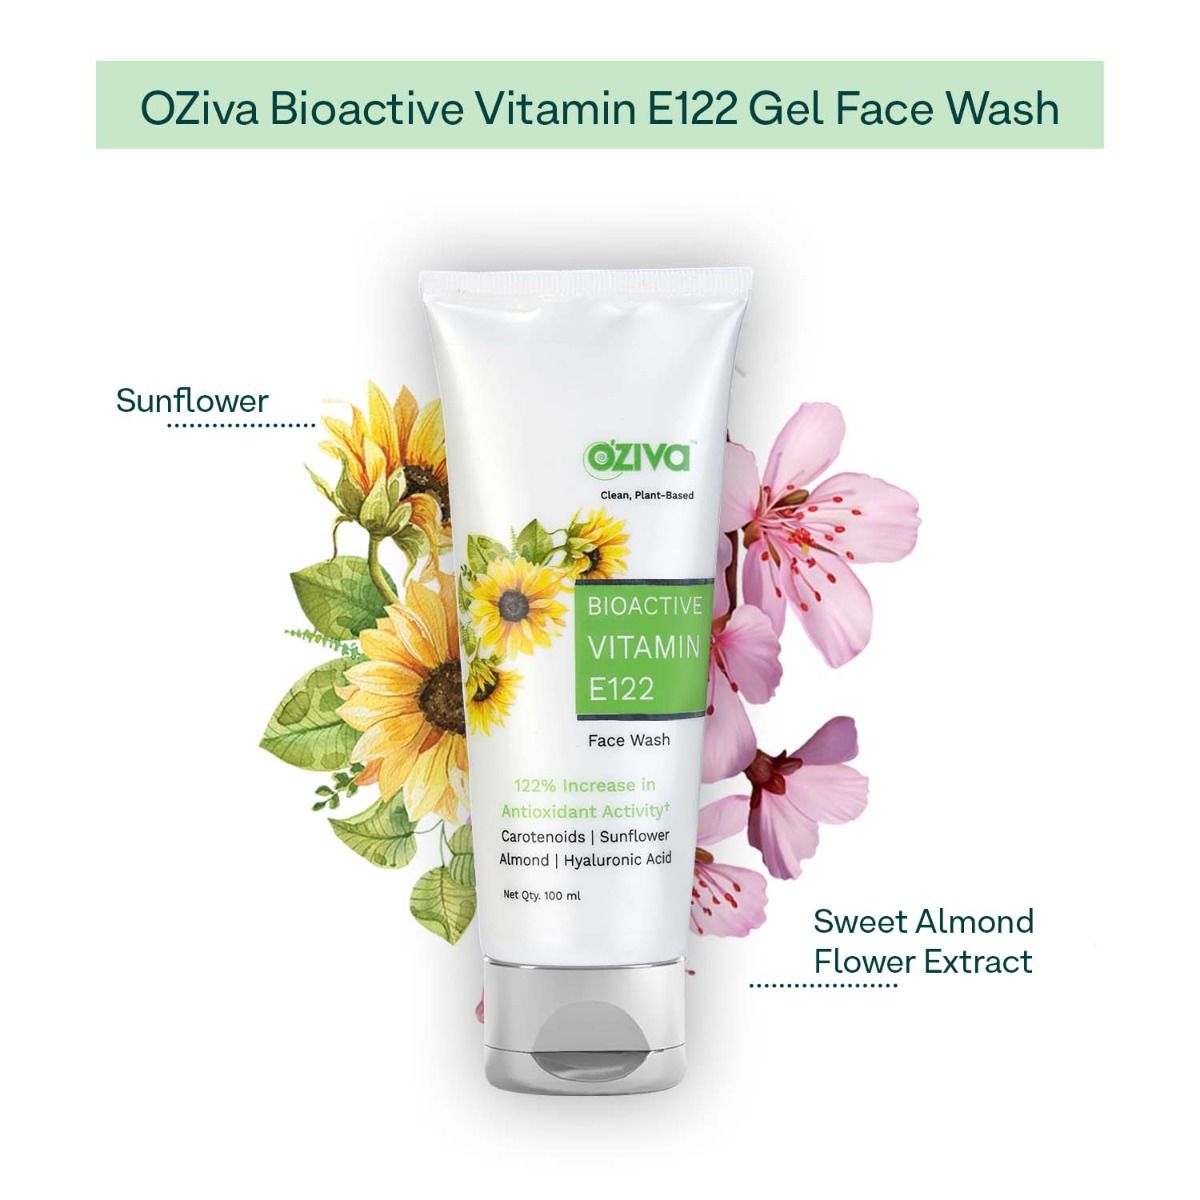 OZiva Bioactive Vitamin E122 Face Wash, 100 ml, Pack of 1 